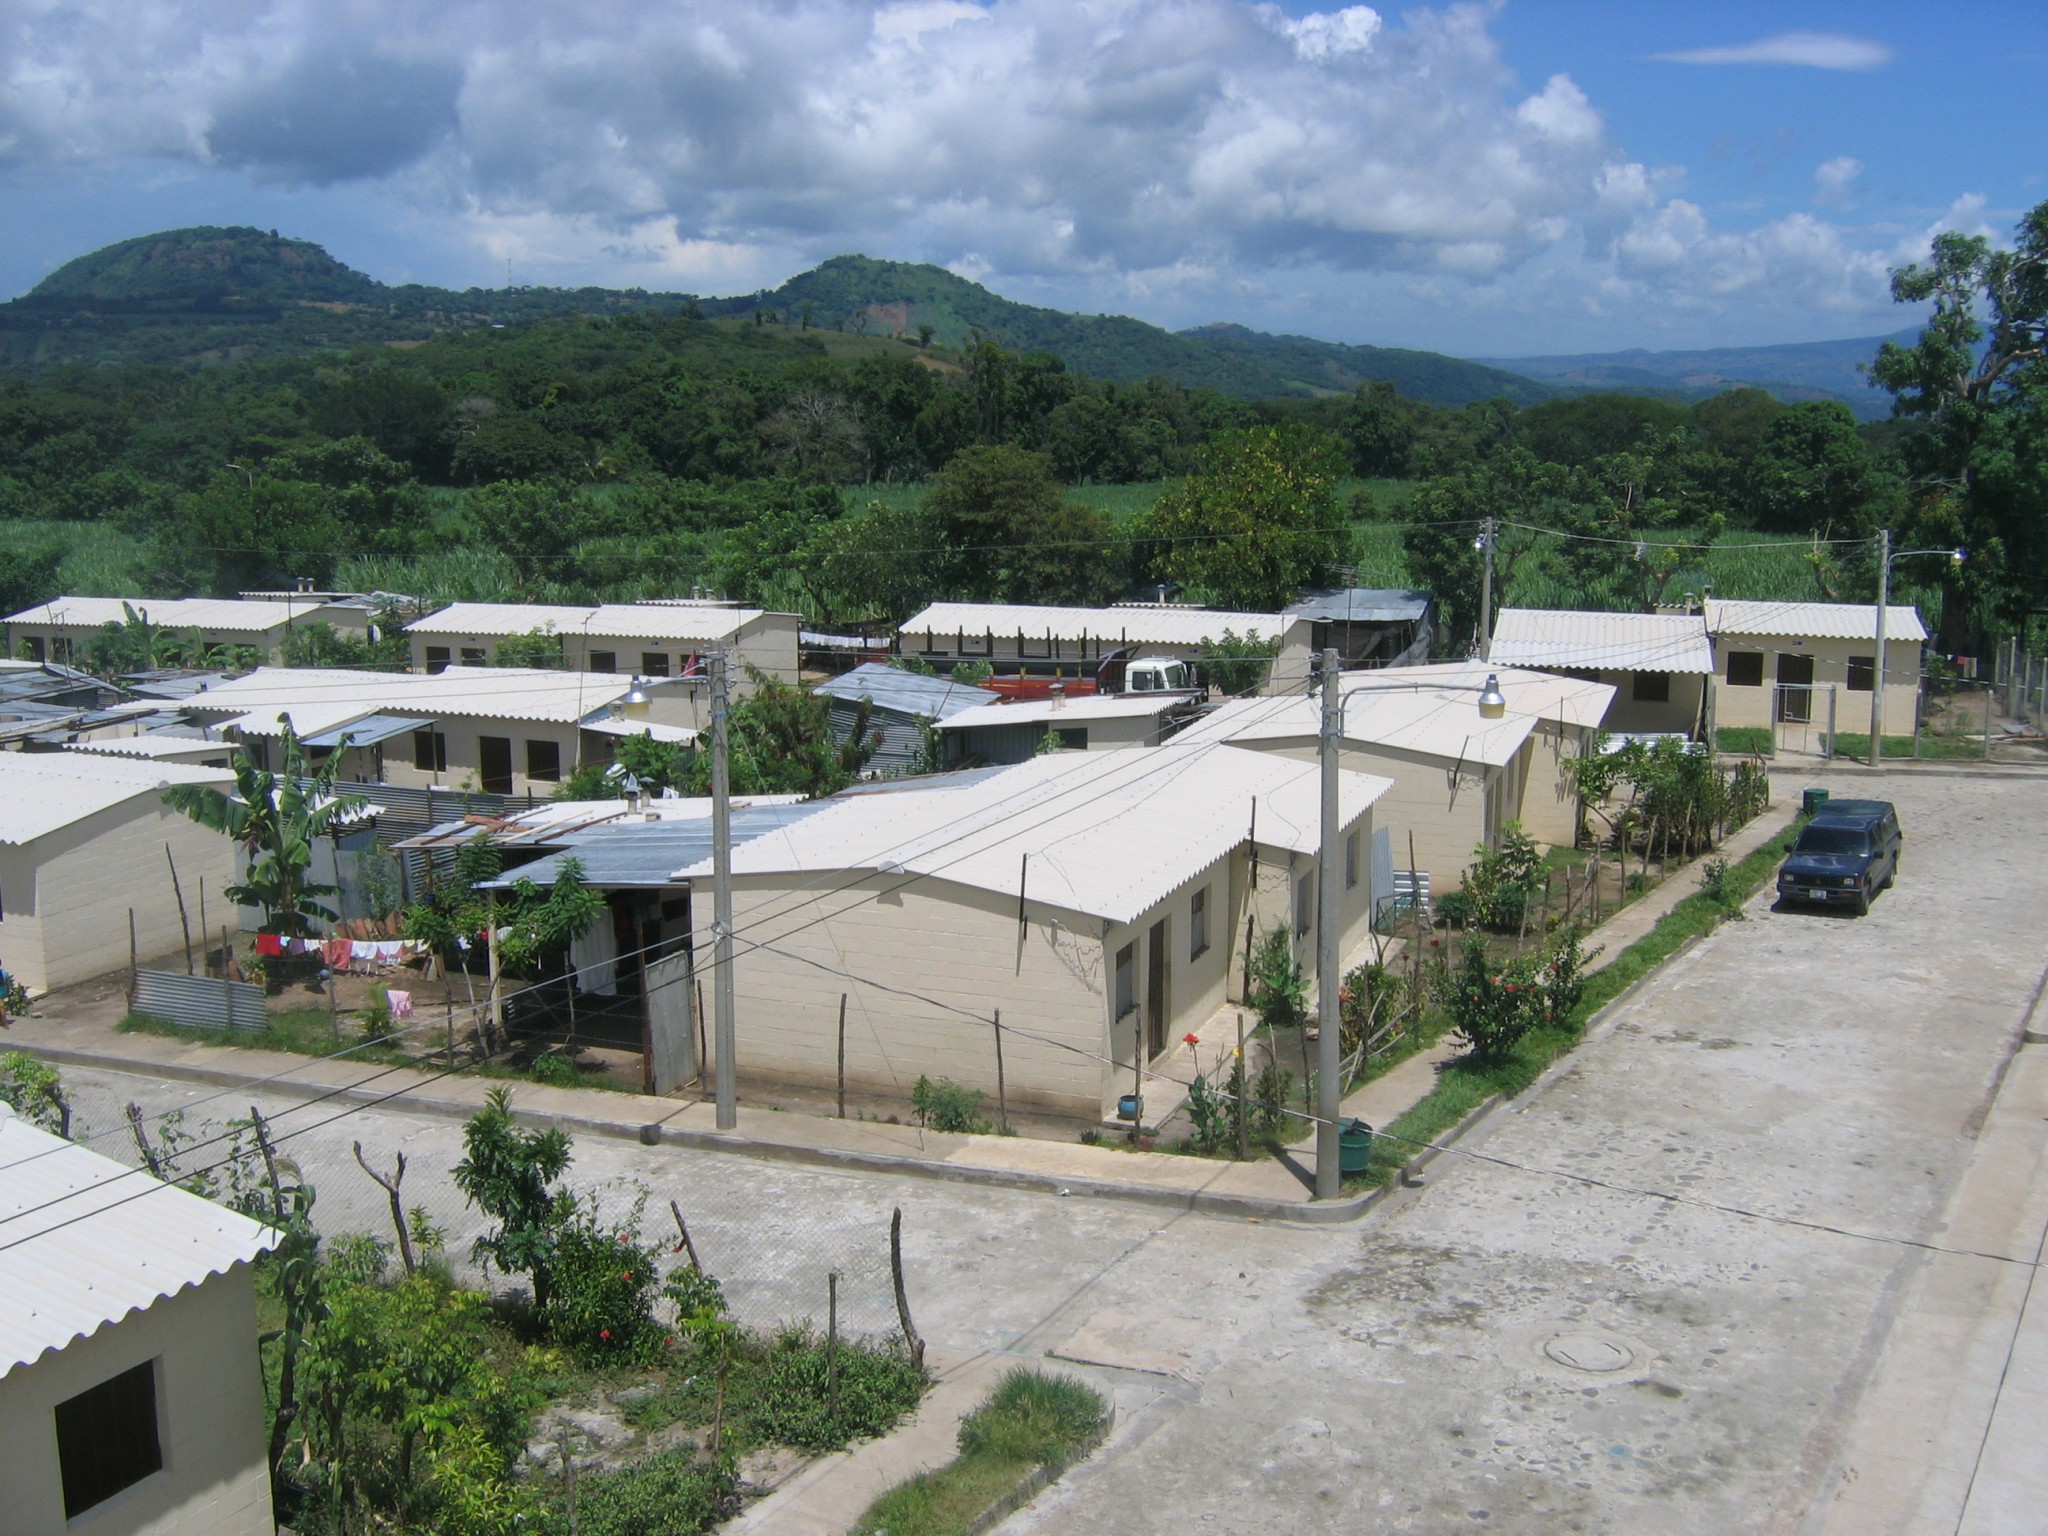 1 Earthquake resistant houses San Cayetano El Salvador